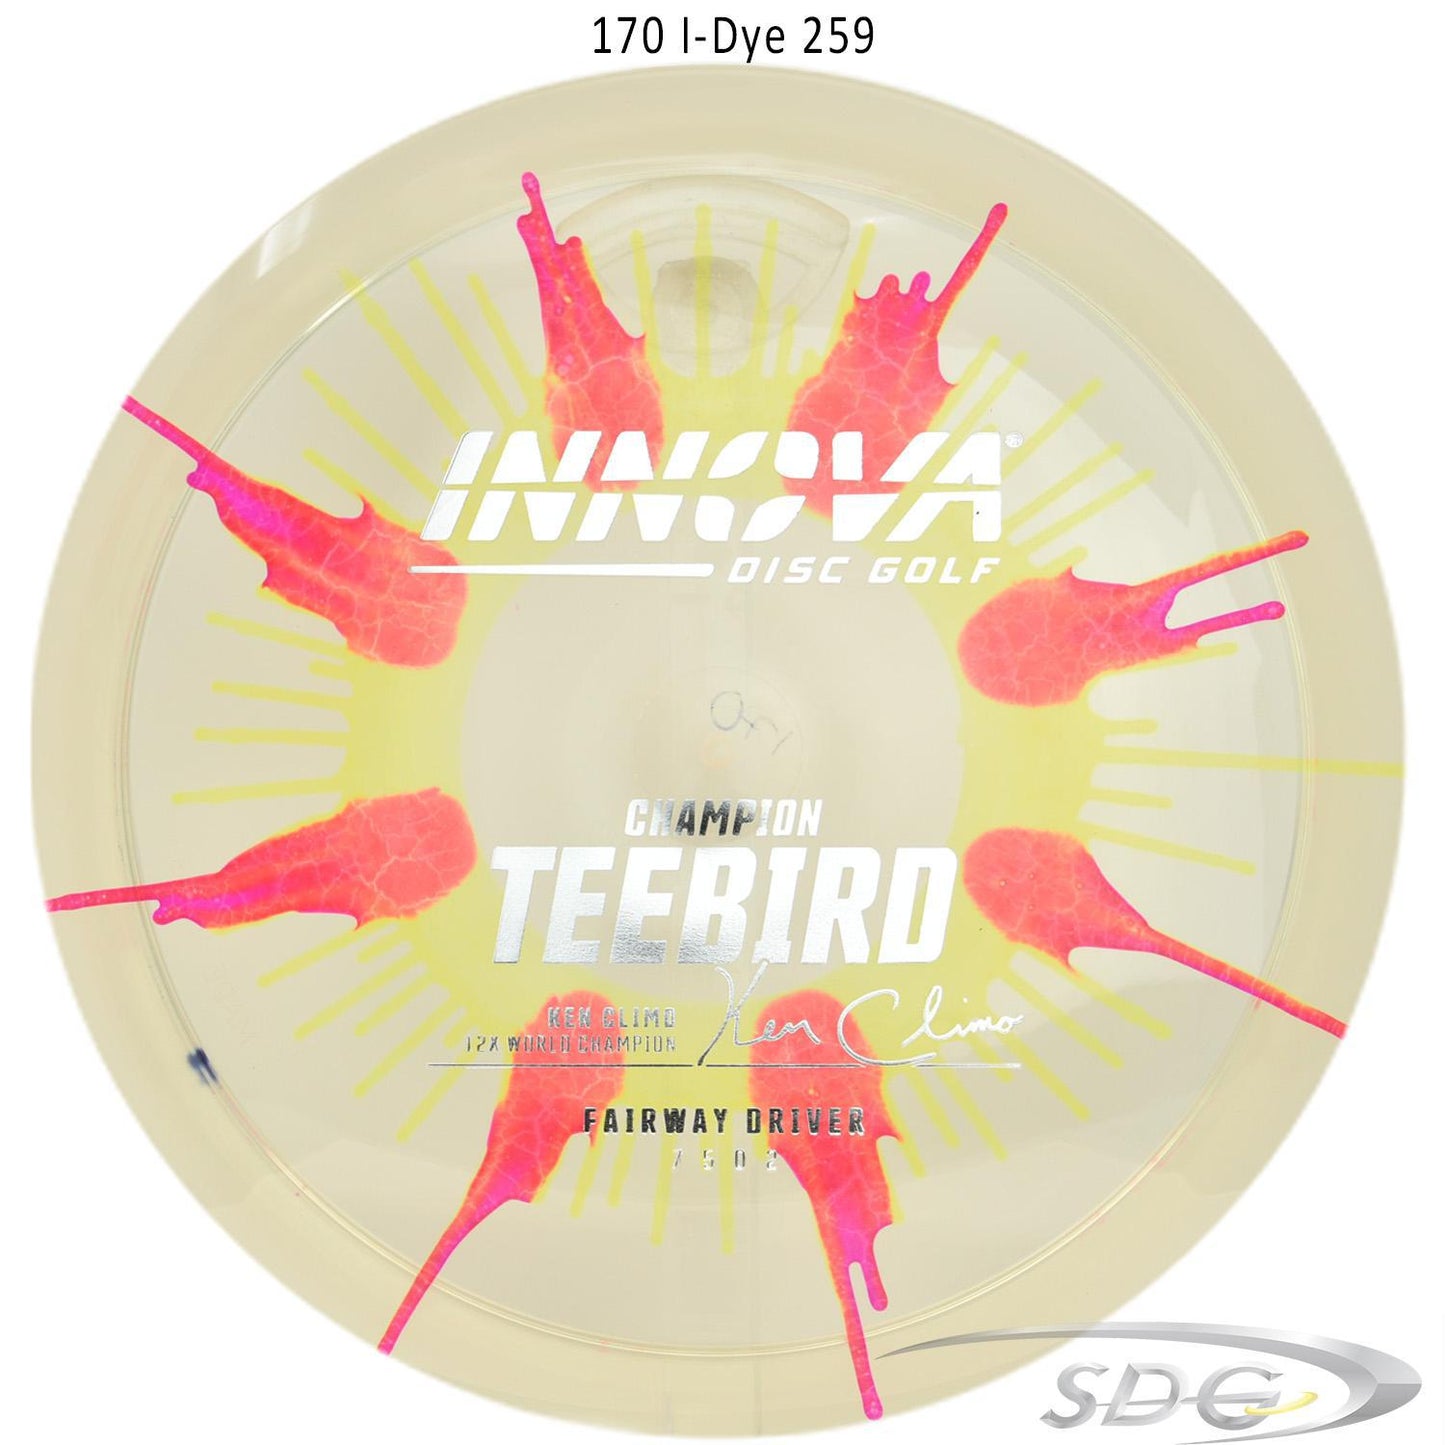 innova-champion-teebird-i-dye-disc-golf-fairway-driver 170 I-Dye 259 